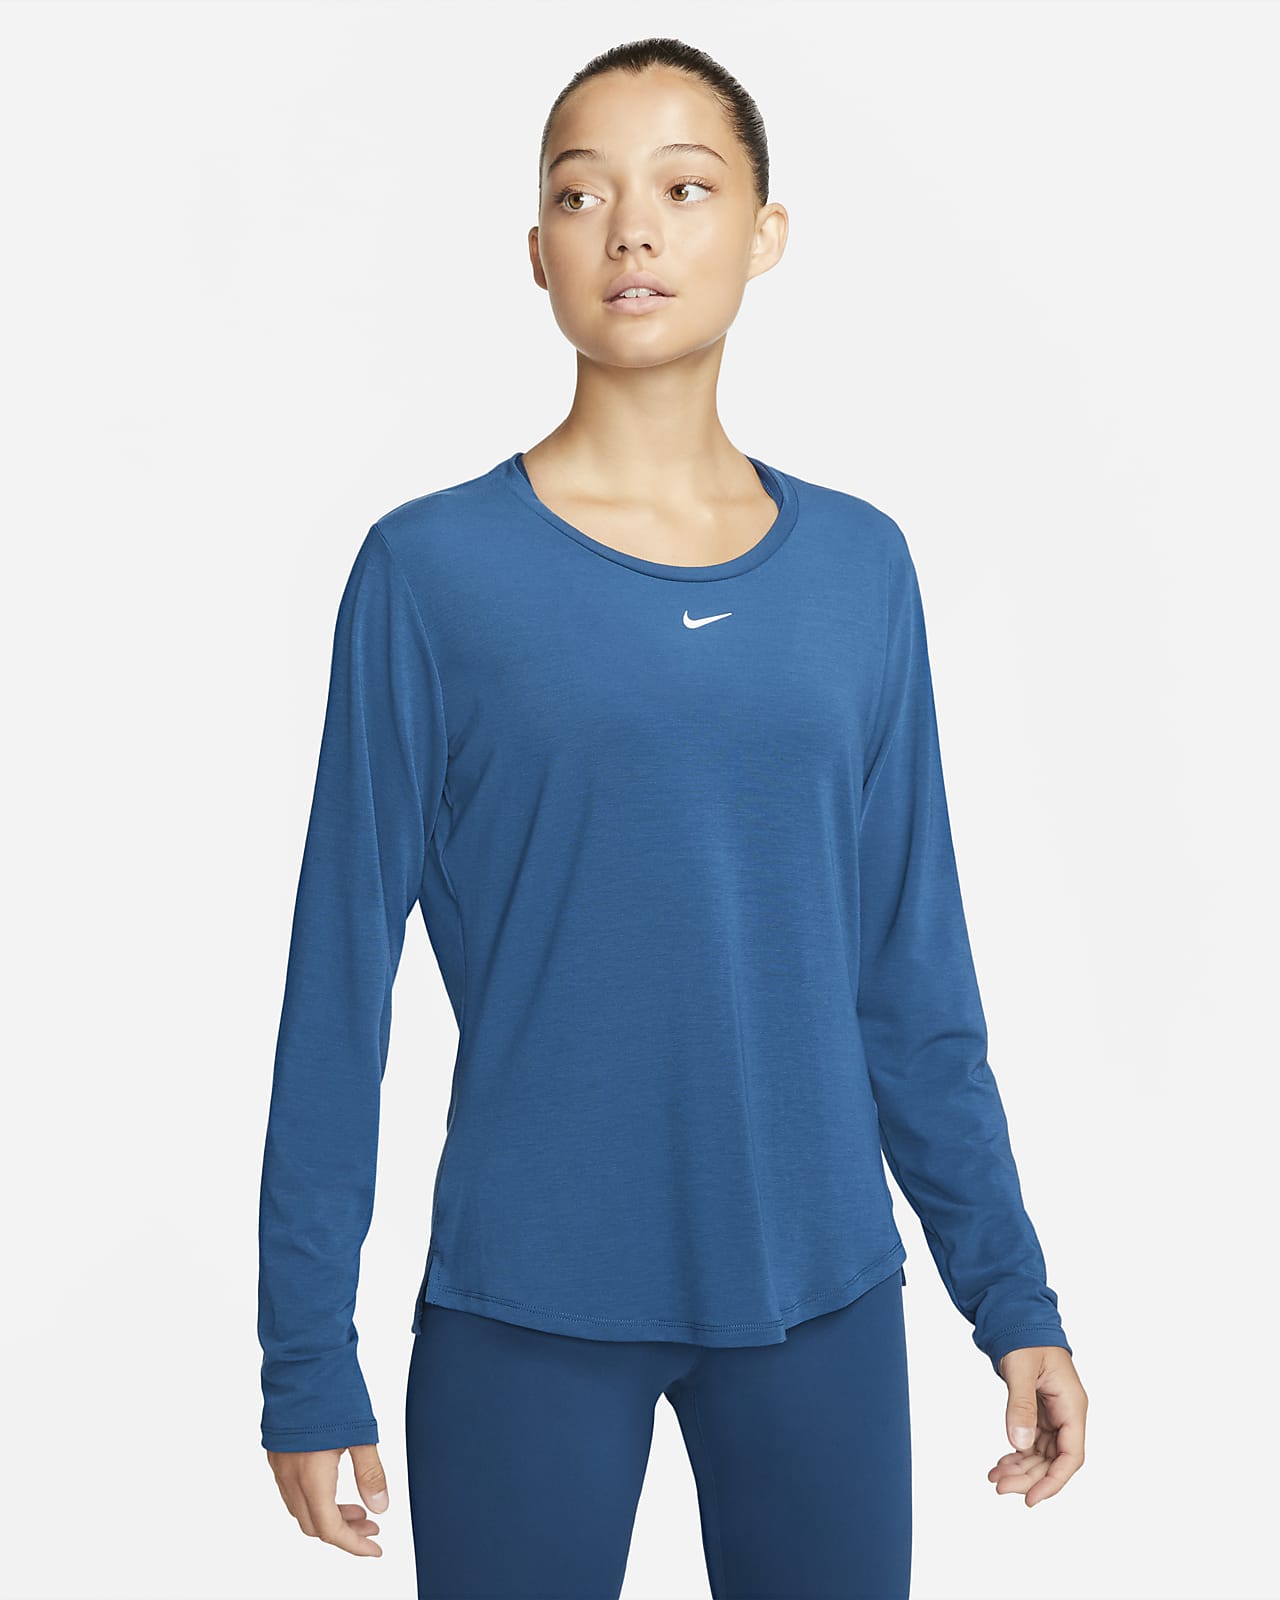 Nike Dri-FIT One Luxe Women's Standard Fit Long-Sleeve Top. Nike.com